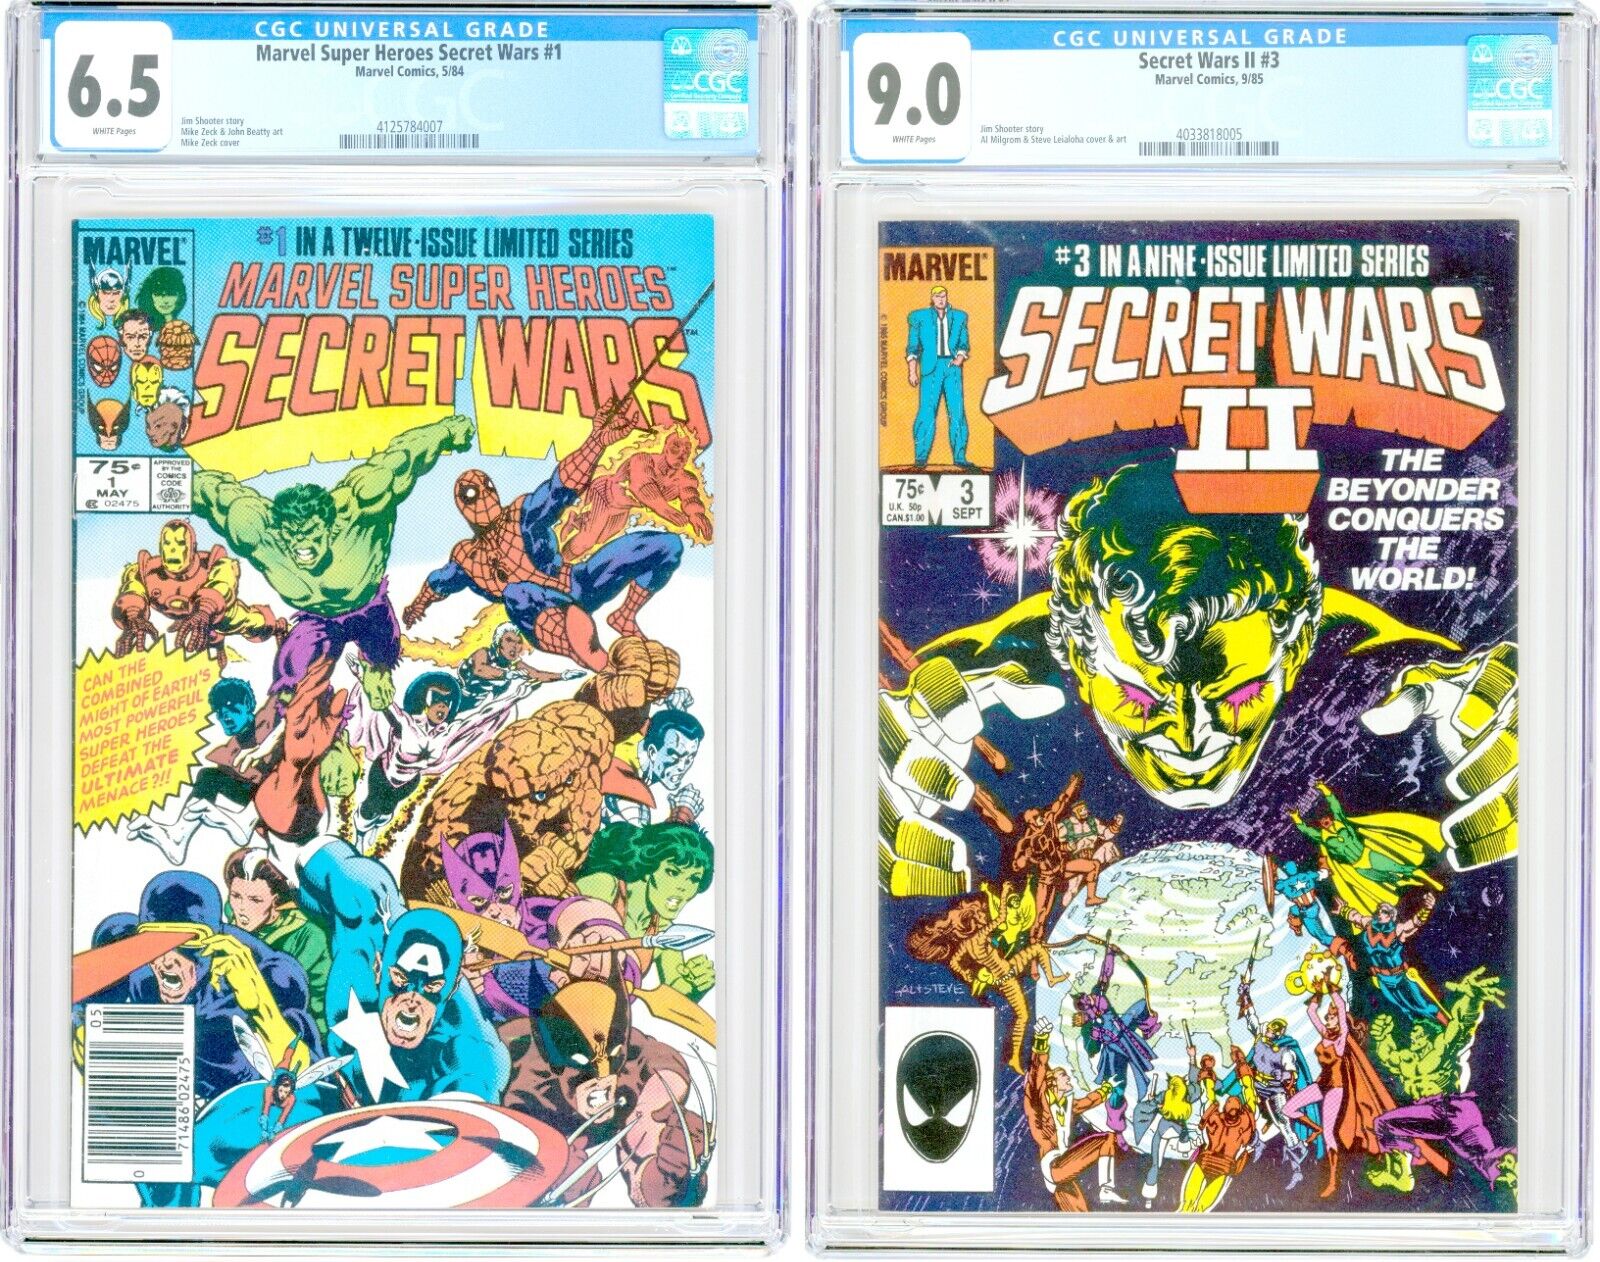 Marvel SUPER-HEROES SECRET WARS #1 CGC 6.5 + SECRET WARS II #3 CGC 9.0 Key SET